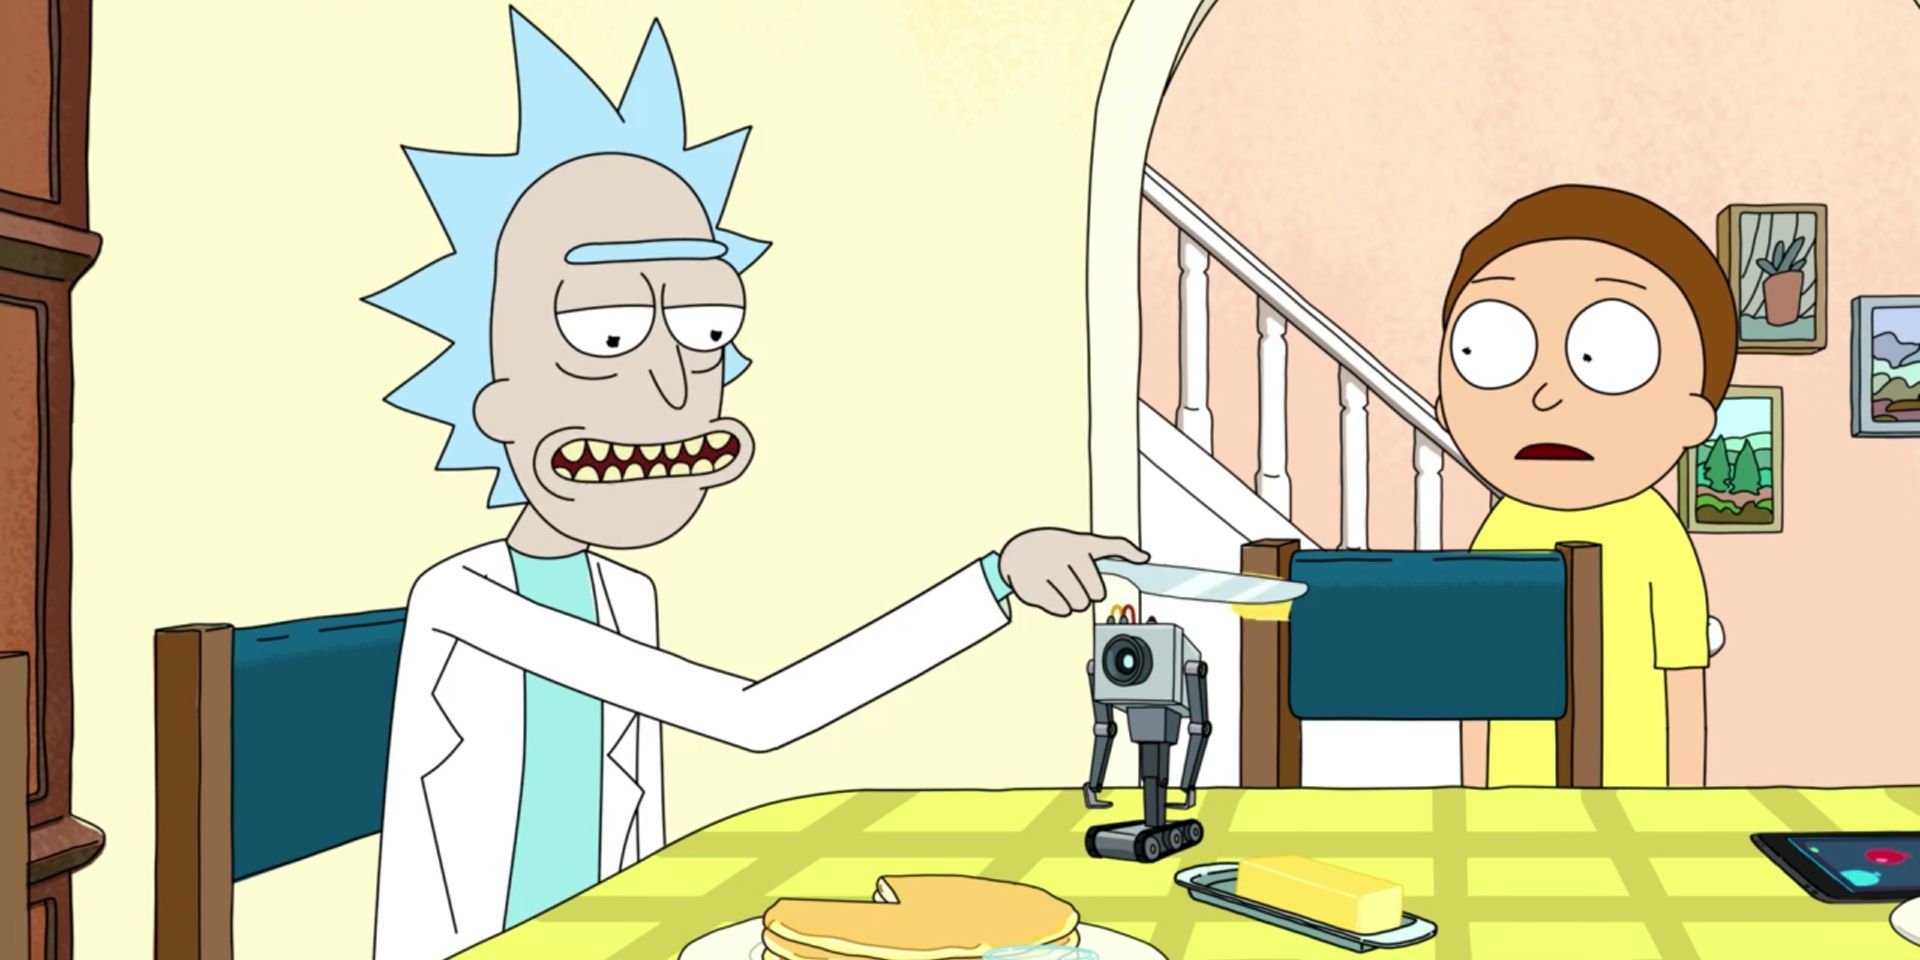 Rick tells the butter robot its purpose.